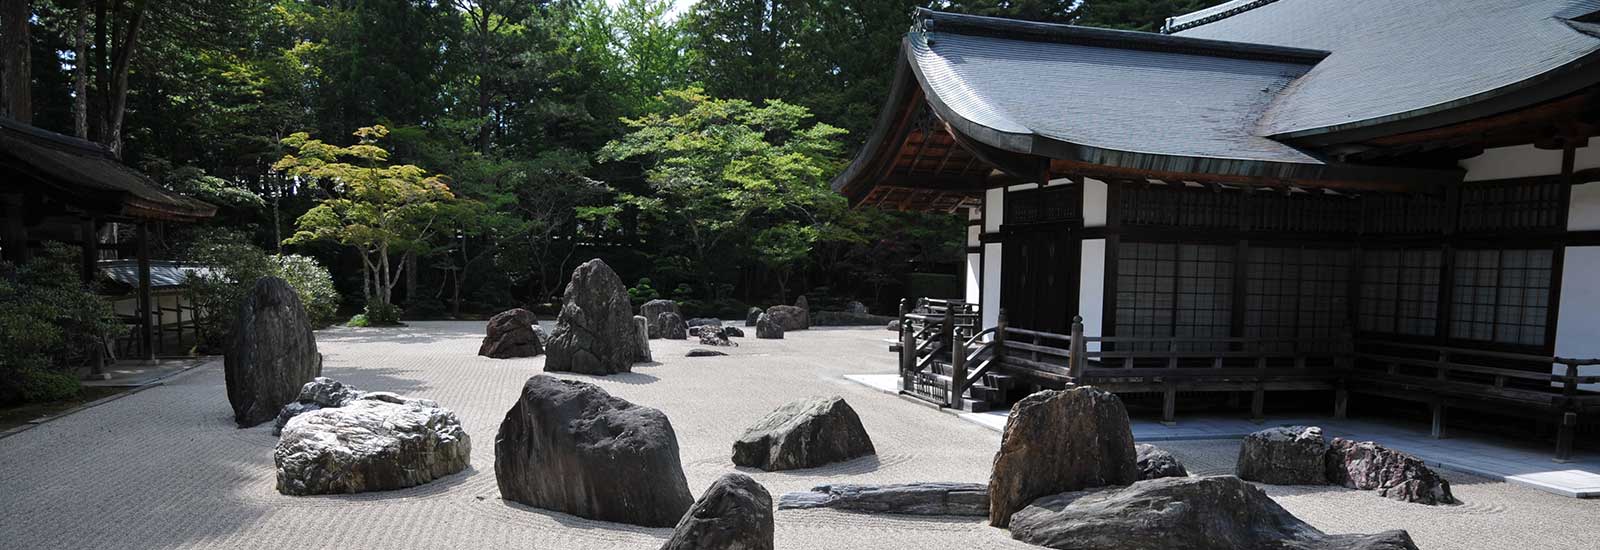 japanese zen garden